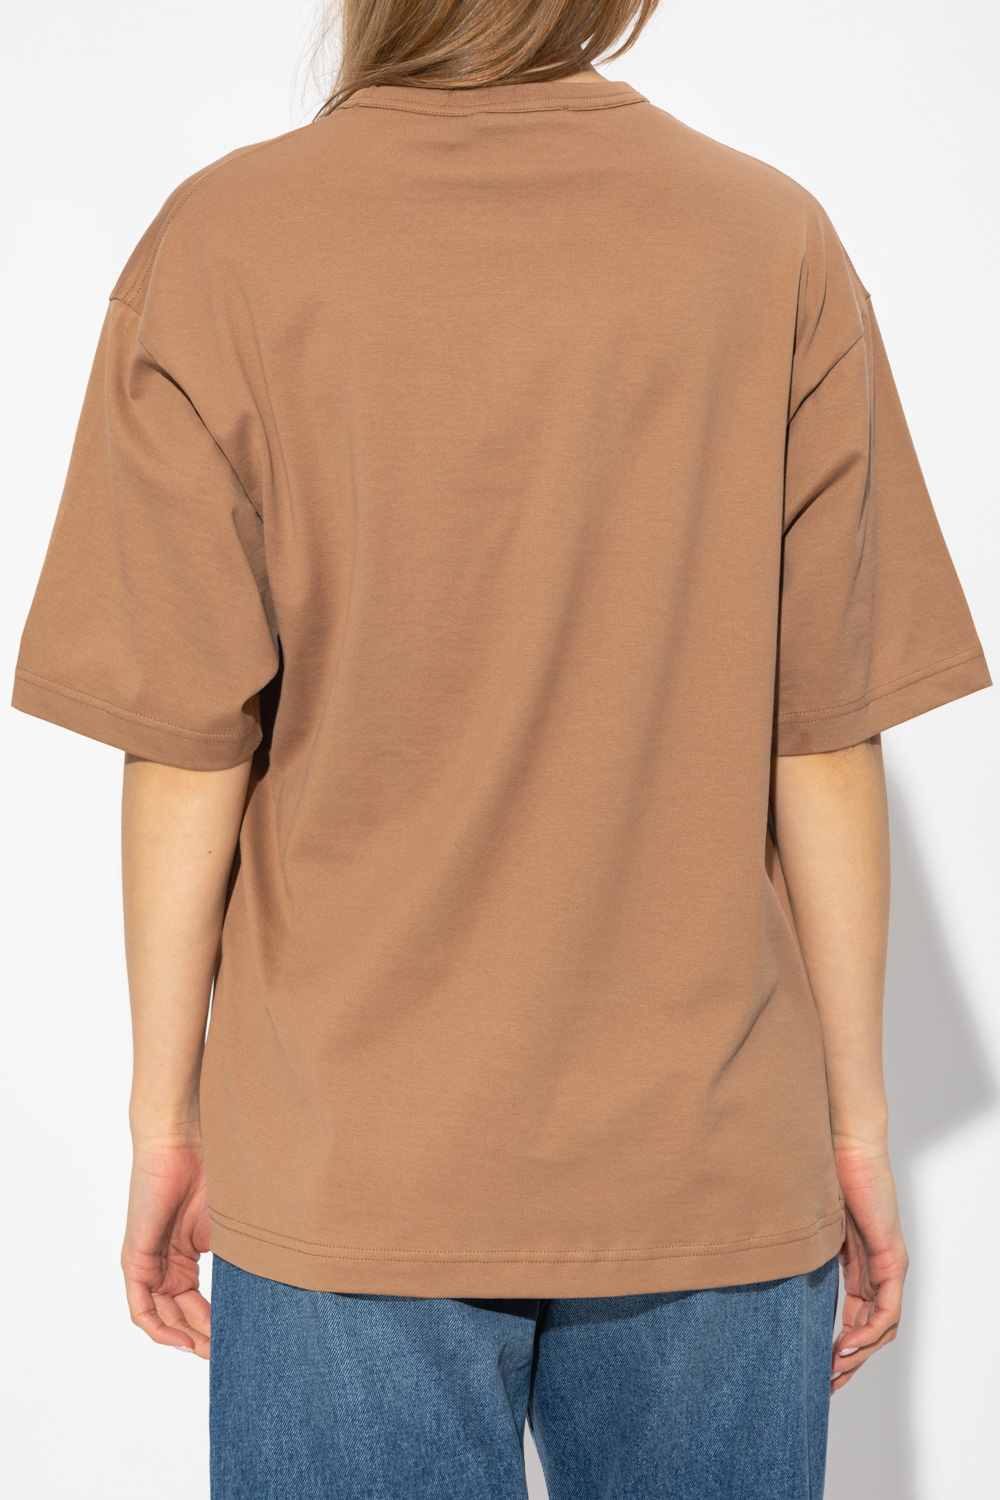 Acne Studios JUST IN XX Nike logo-print layered T-shirt dress